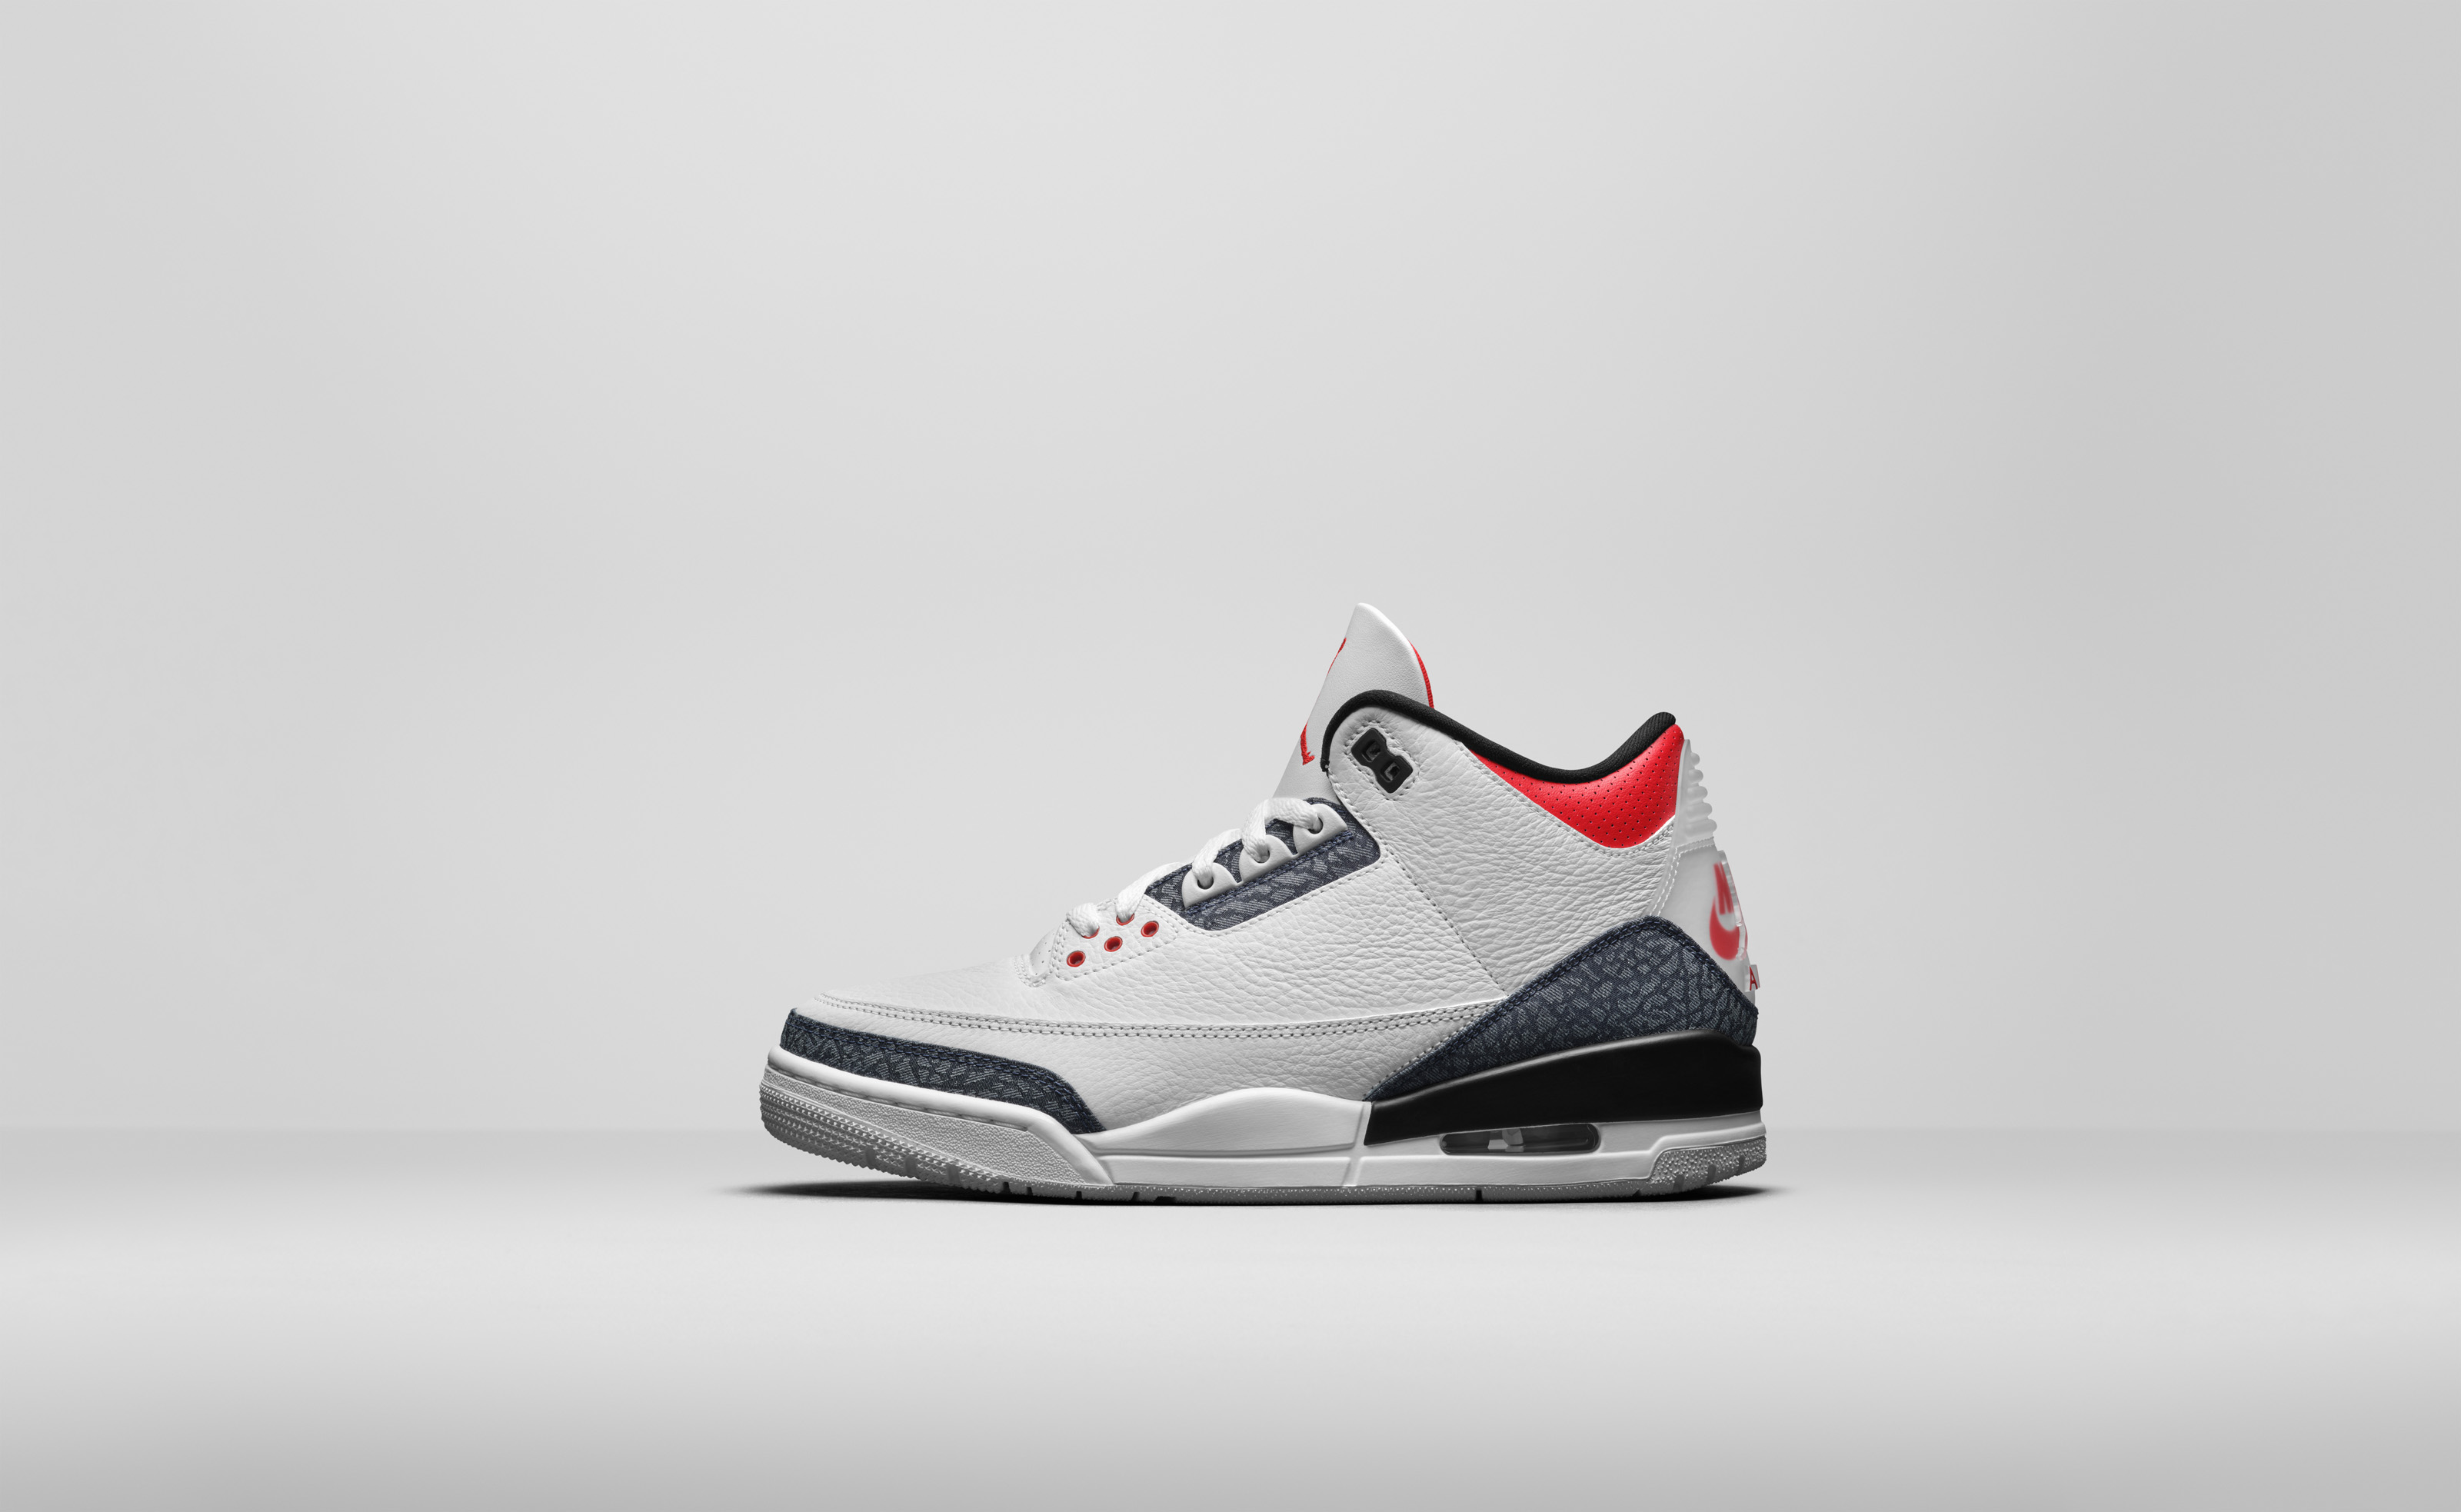 Nike Air Jordan 3 Retro SE Denim “Fire Red” ナイキ エア ジョーダン 3 レトロ se デニム ファイア レッド